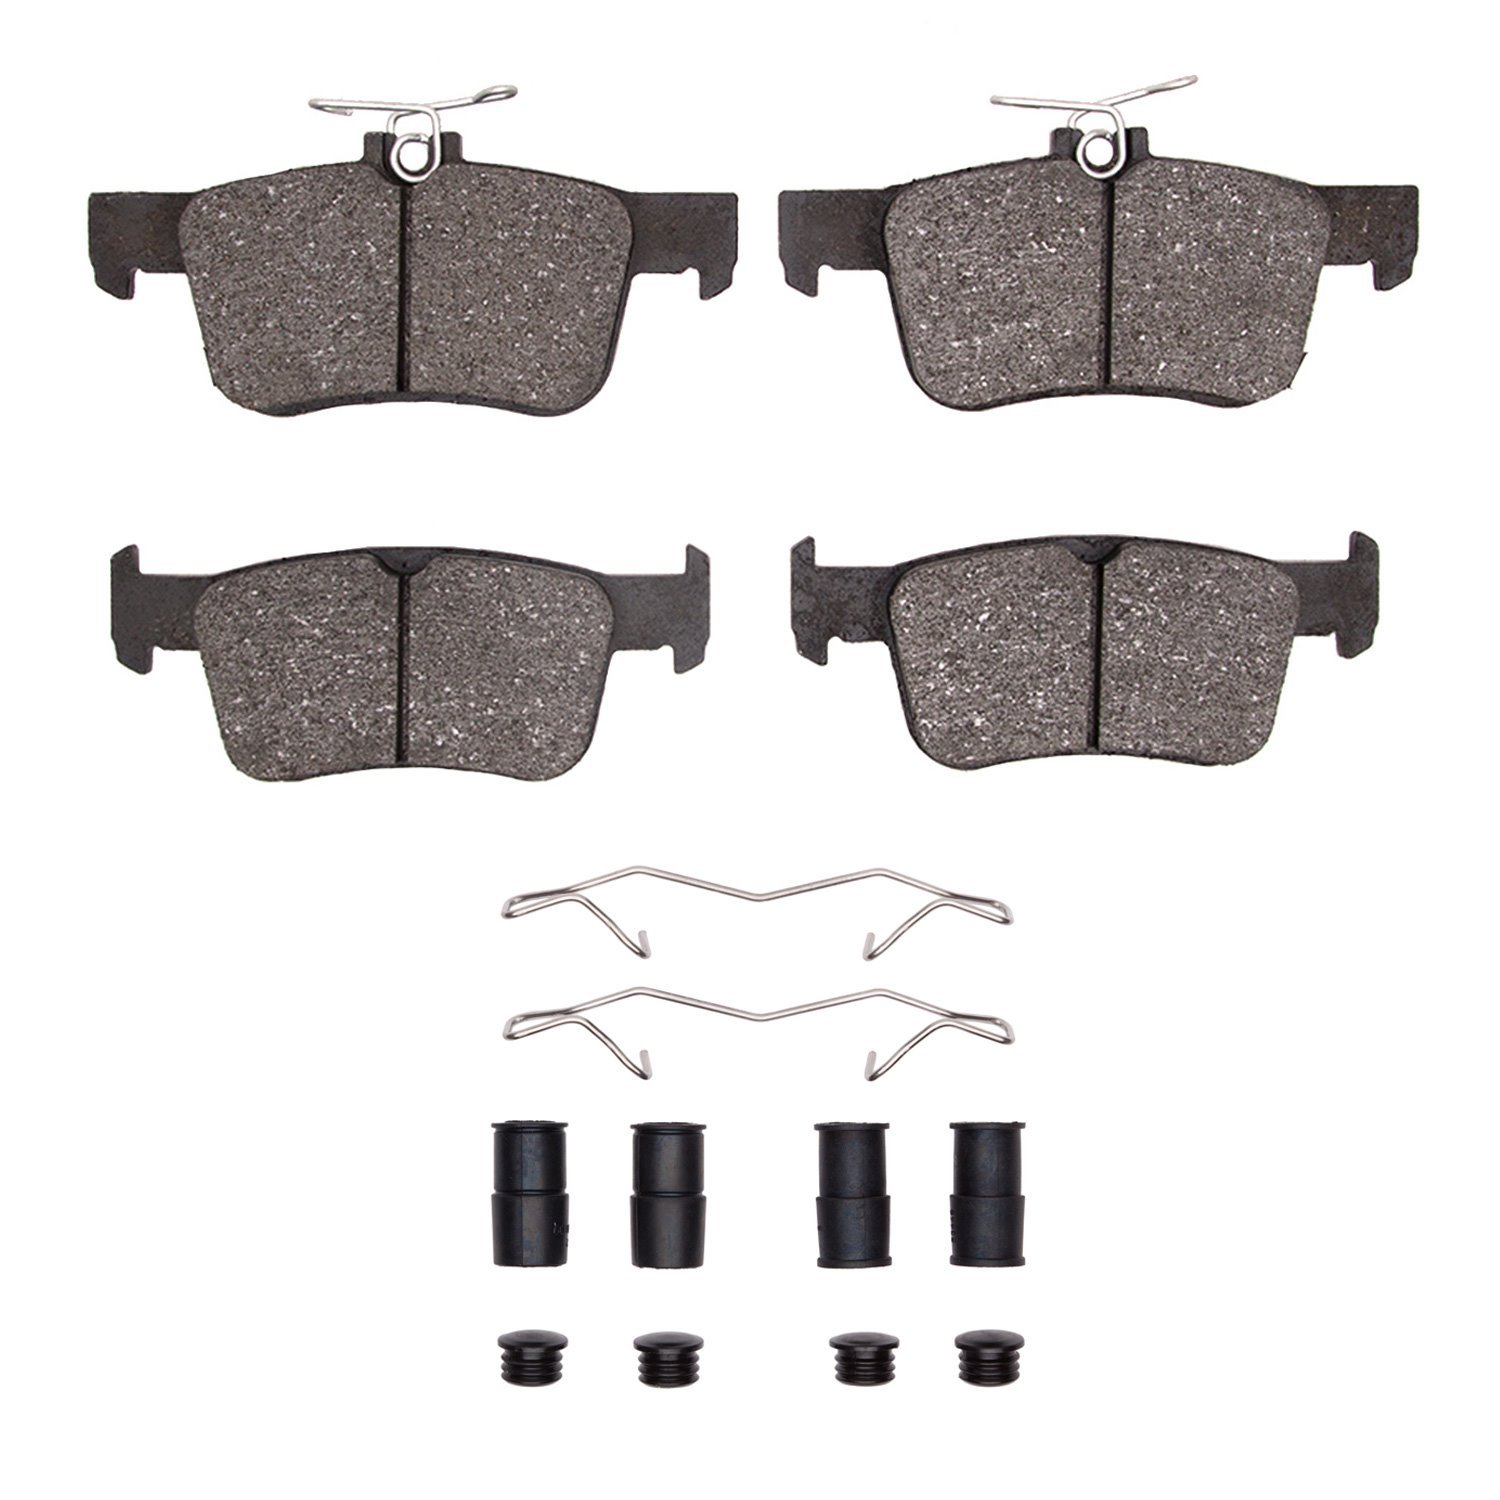 1310-2102-01 3000-Series Ceramic Brake Pads & Hardware Kit, Fits Select Acura/Honda, Position: Rear